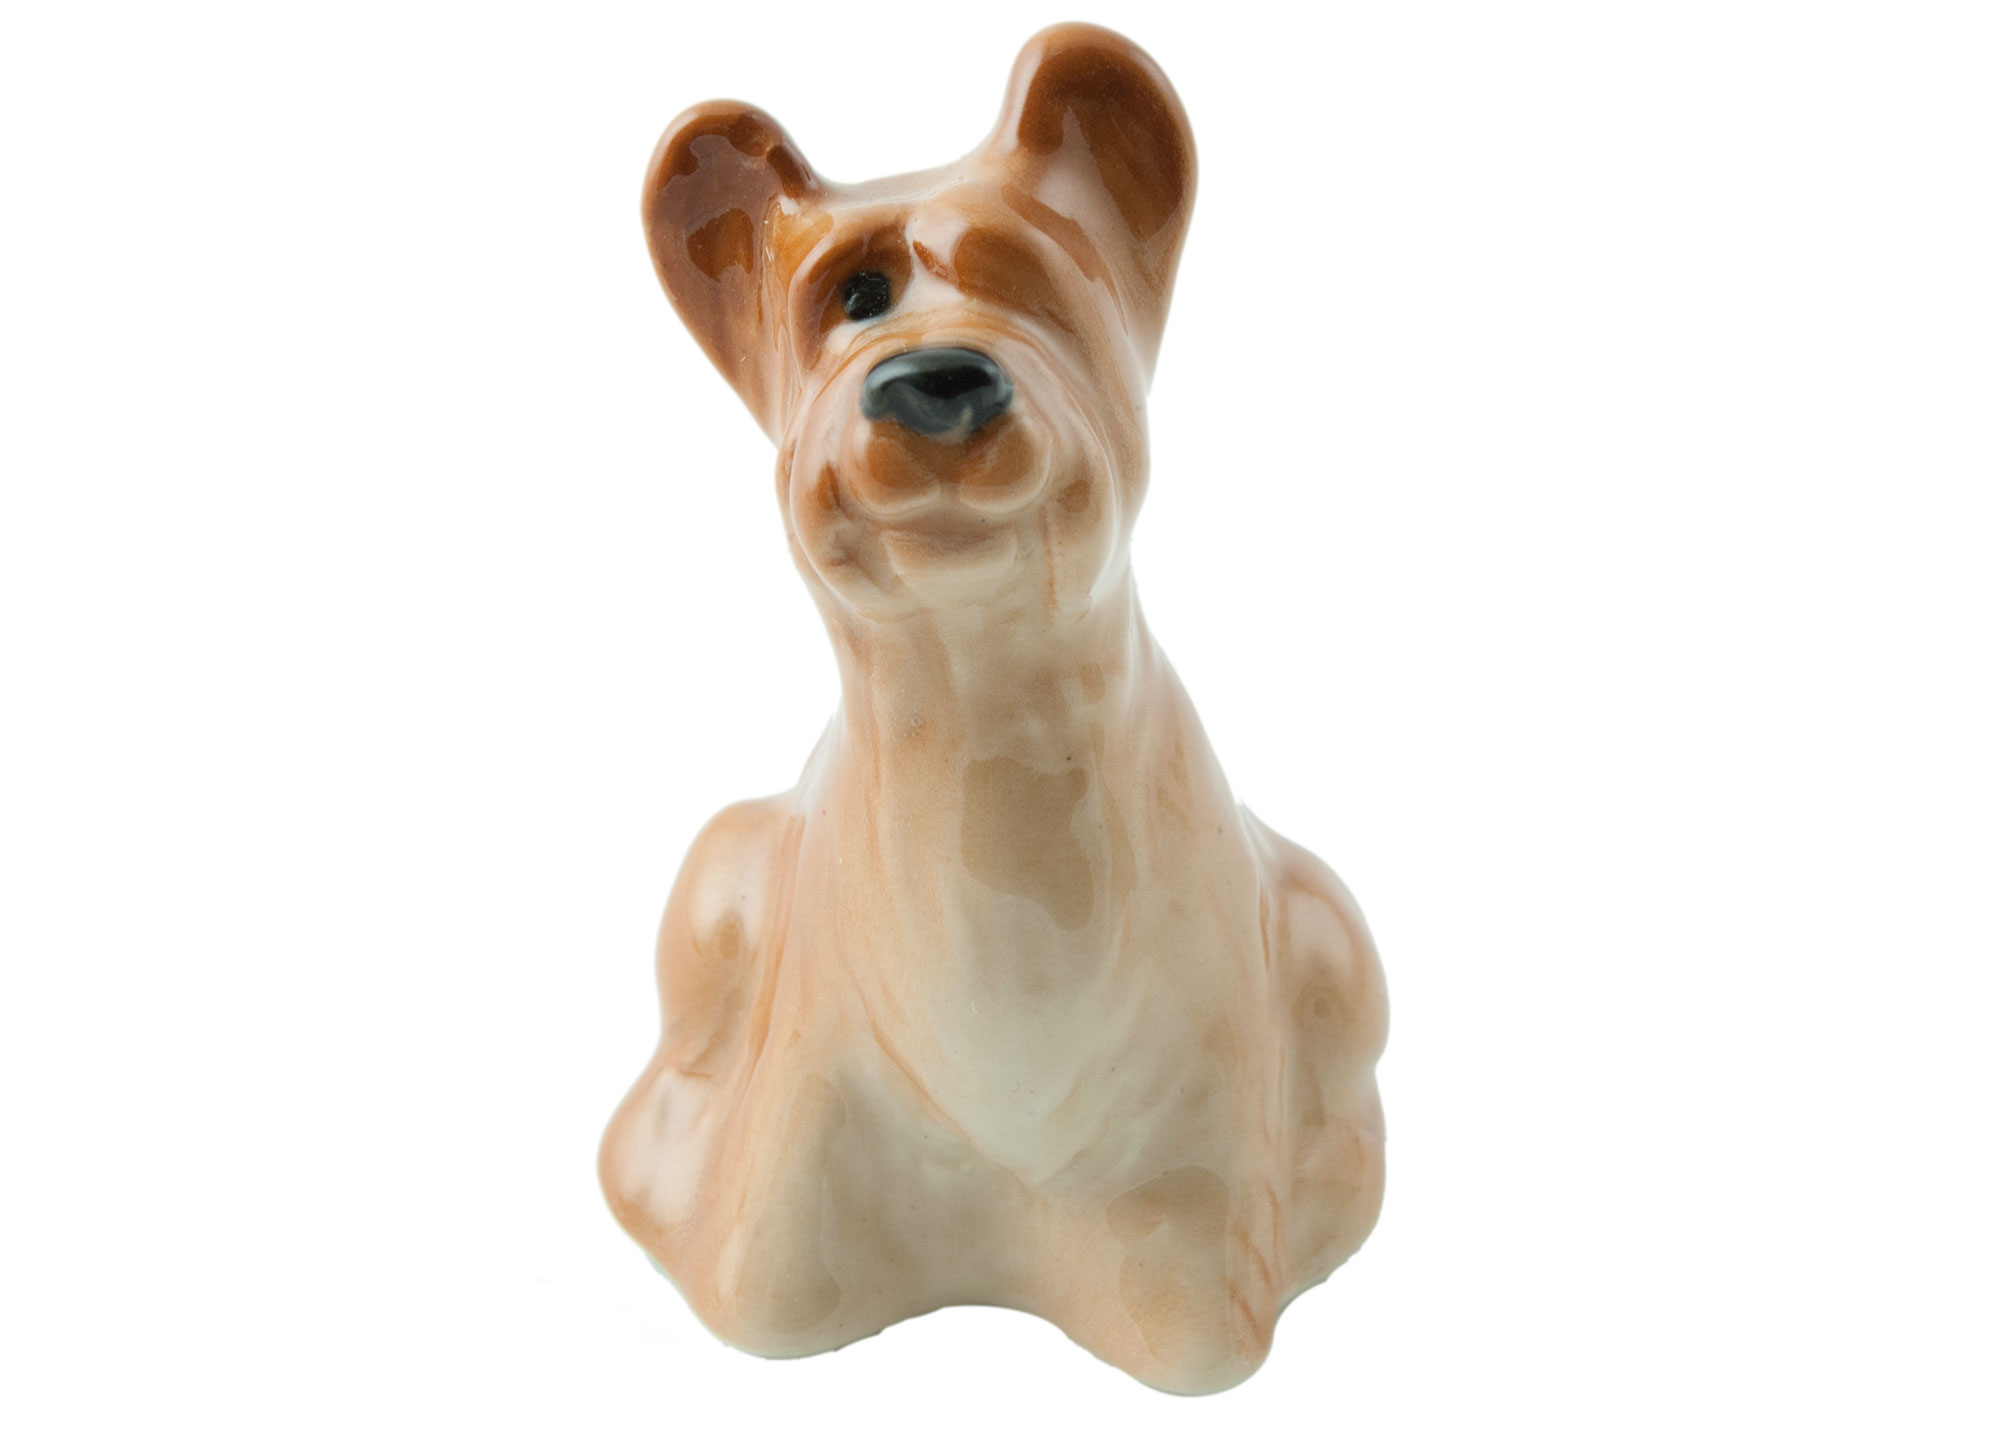 Buy Briard Porcelain Figurine at GoldenCockerel.com